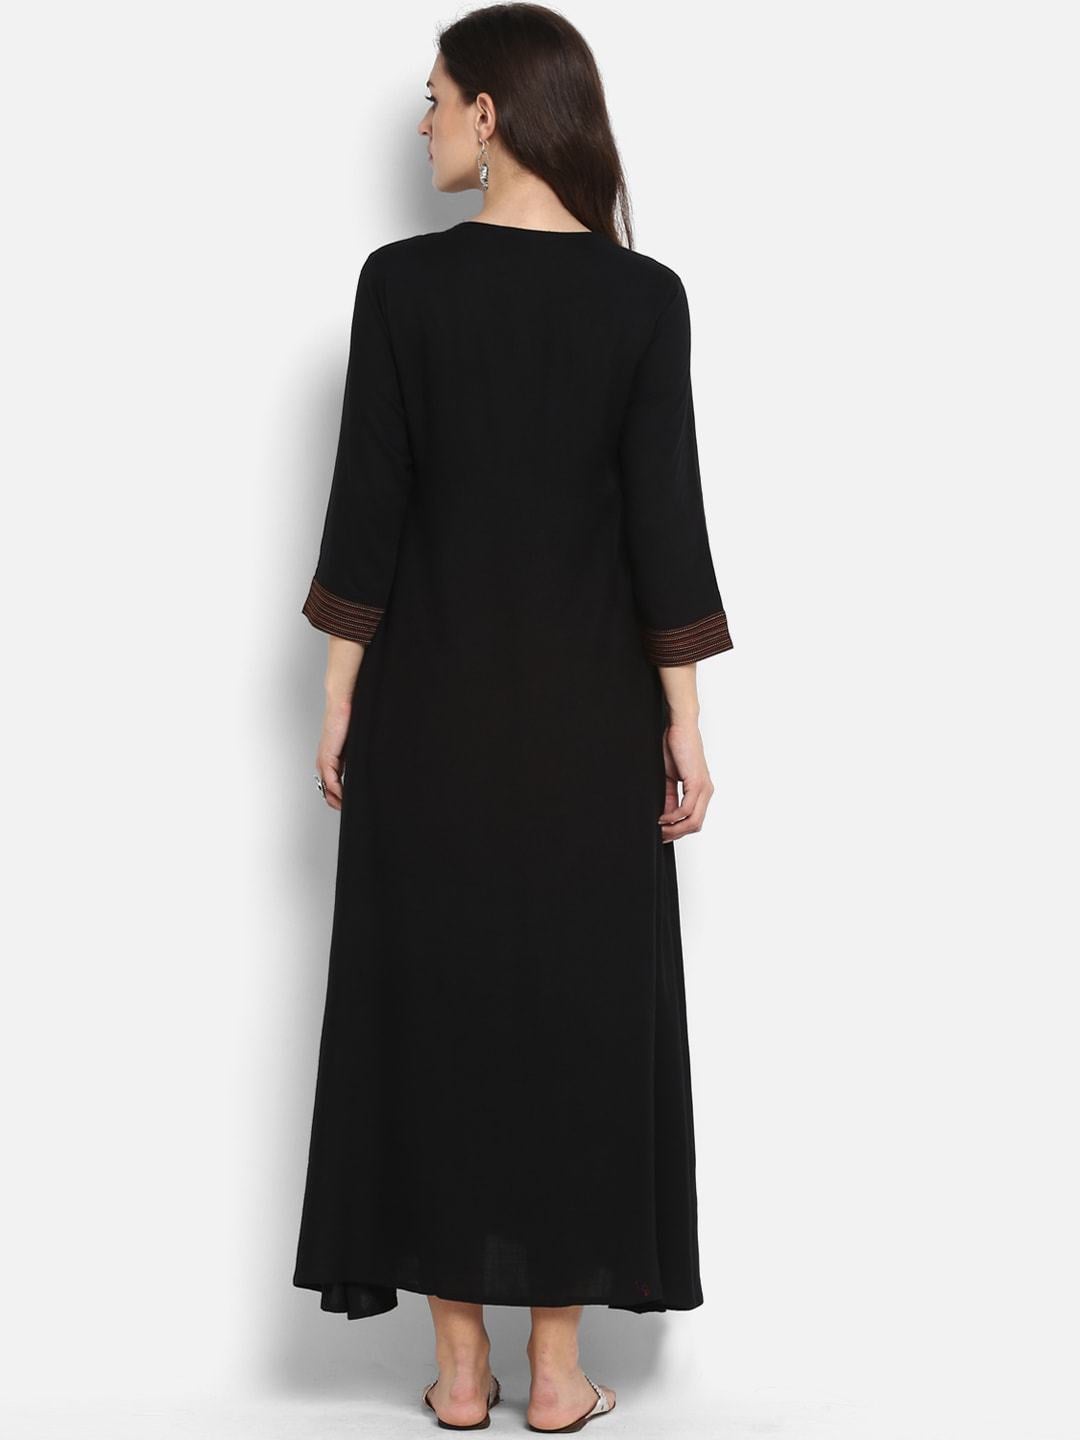 Women's Black Embellished Maxi Dress - Meeranshi